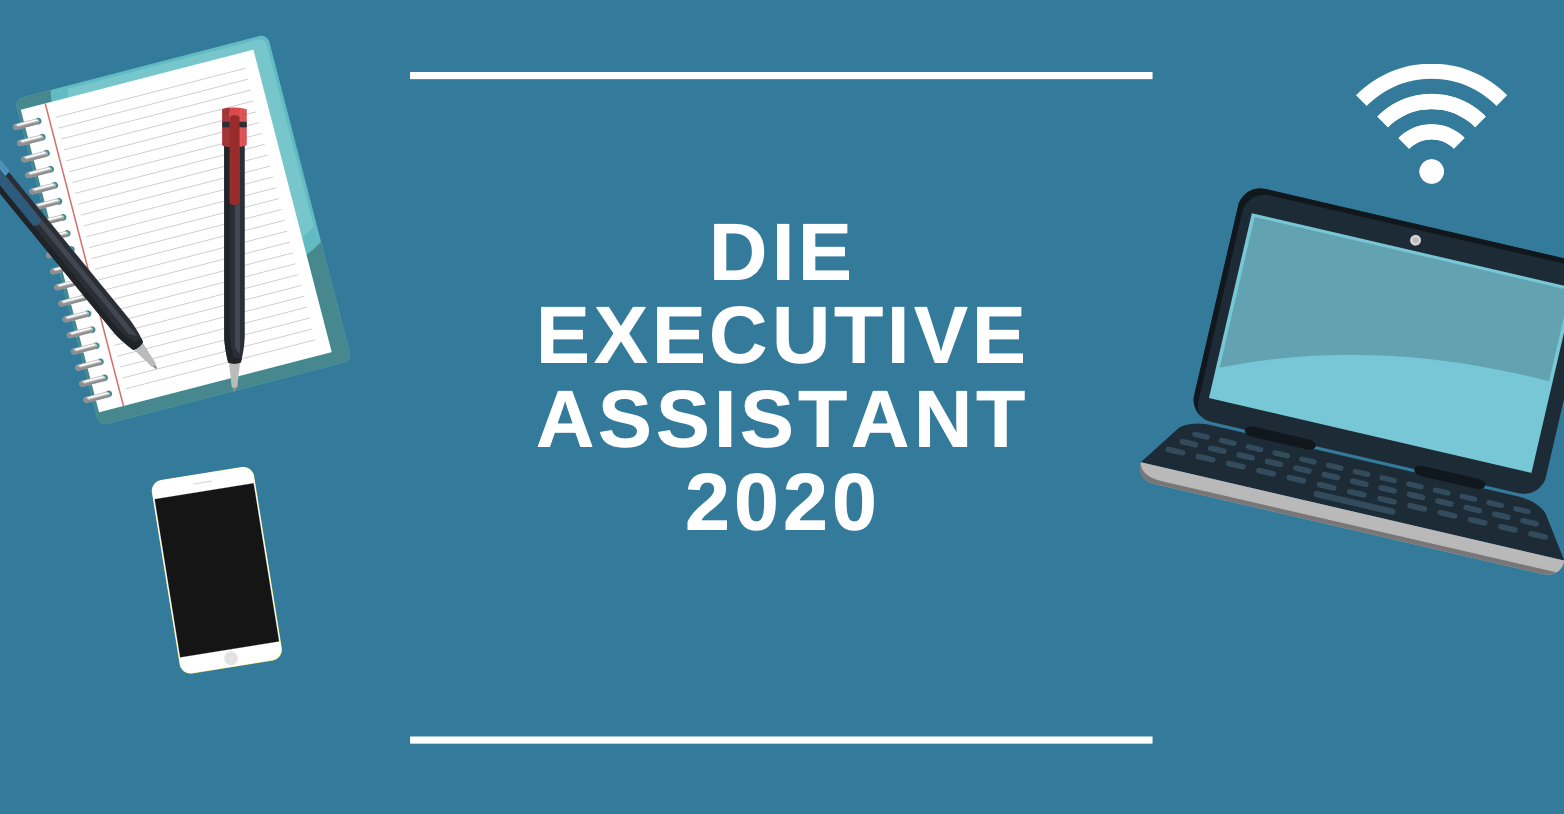 Titelbild: Die Executive Assistant im Jahr 2020